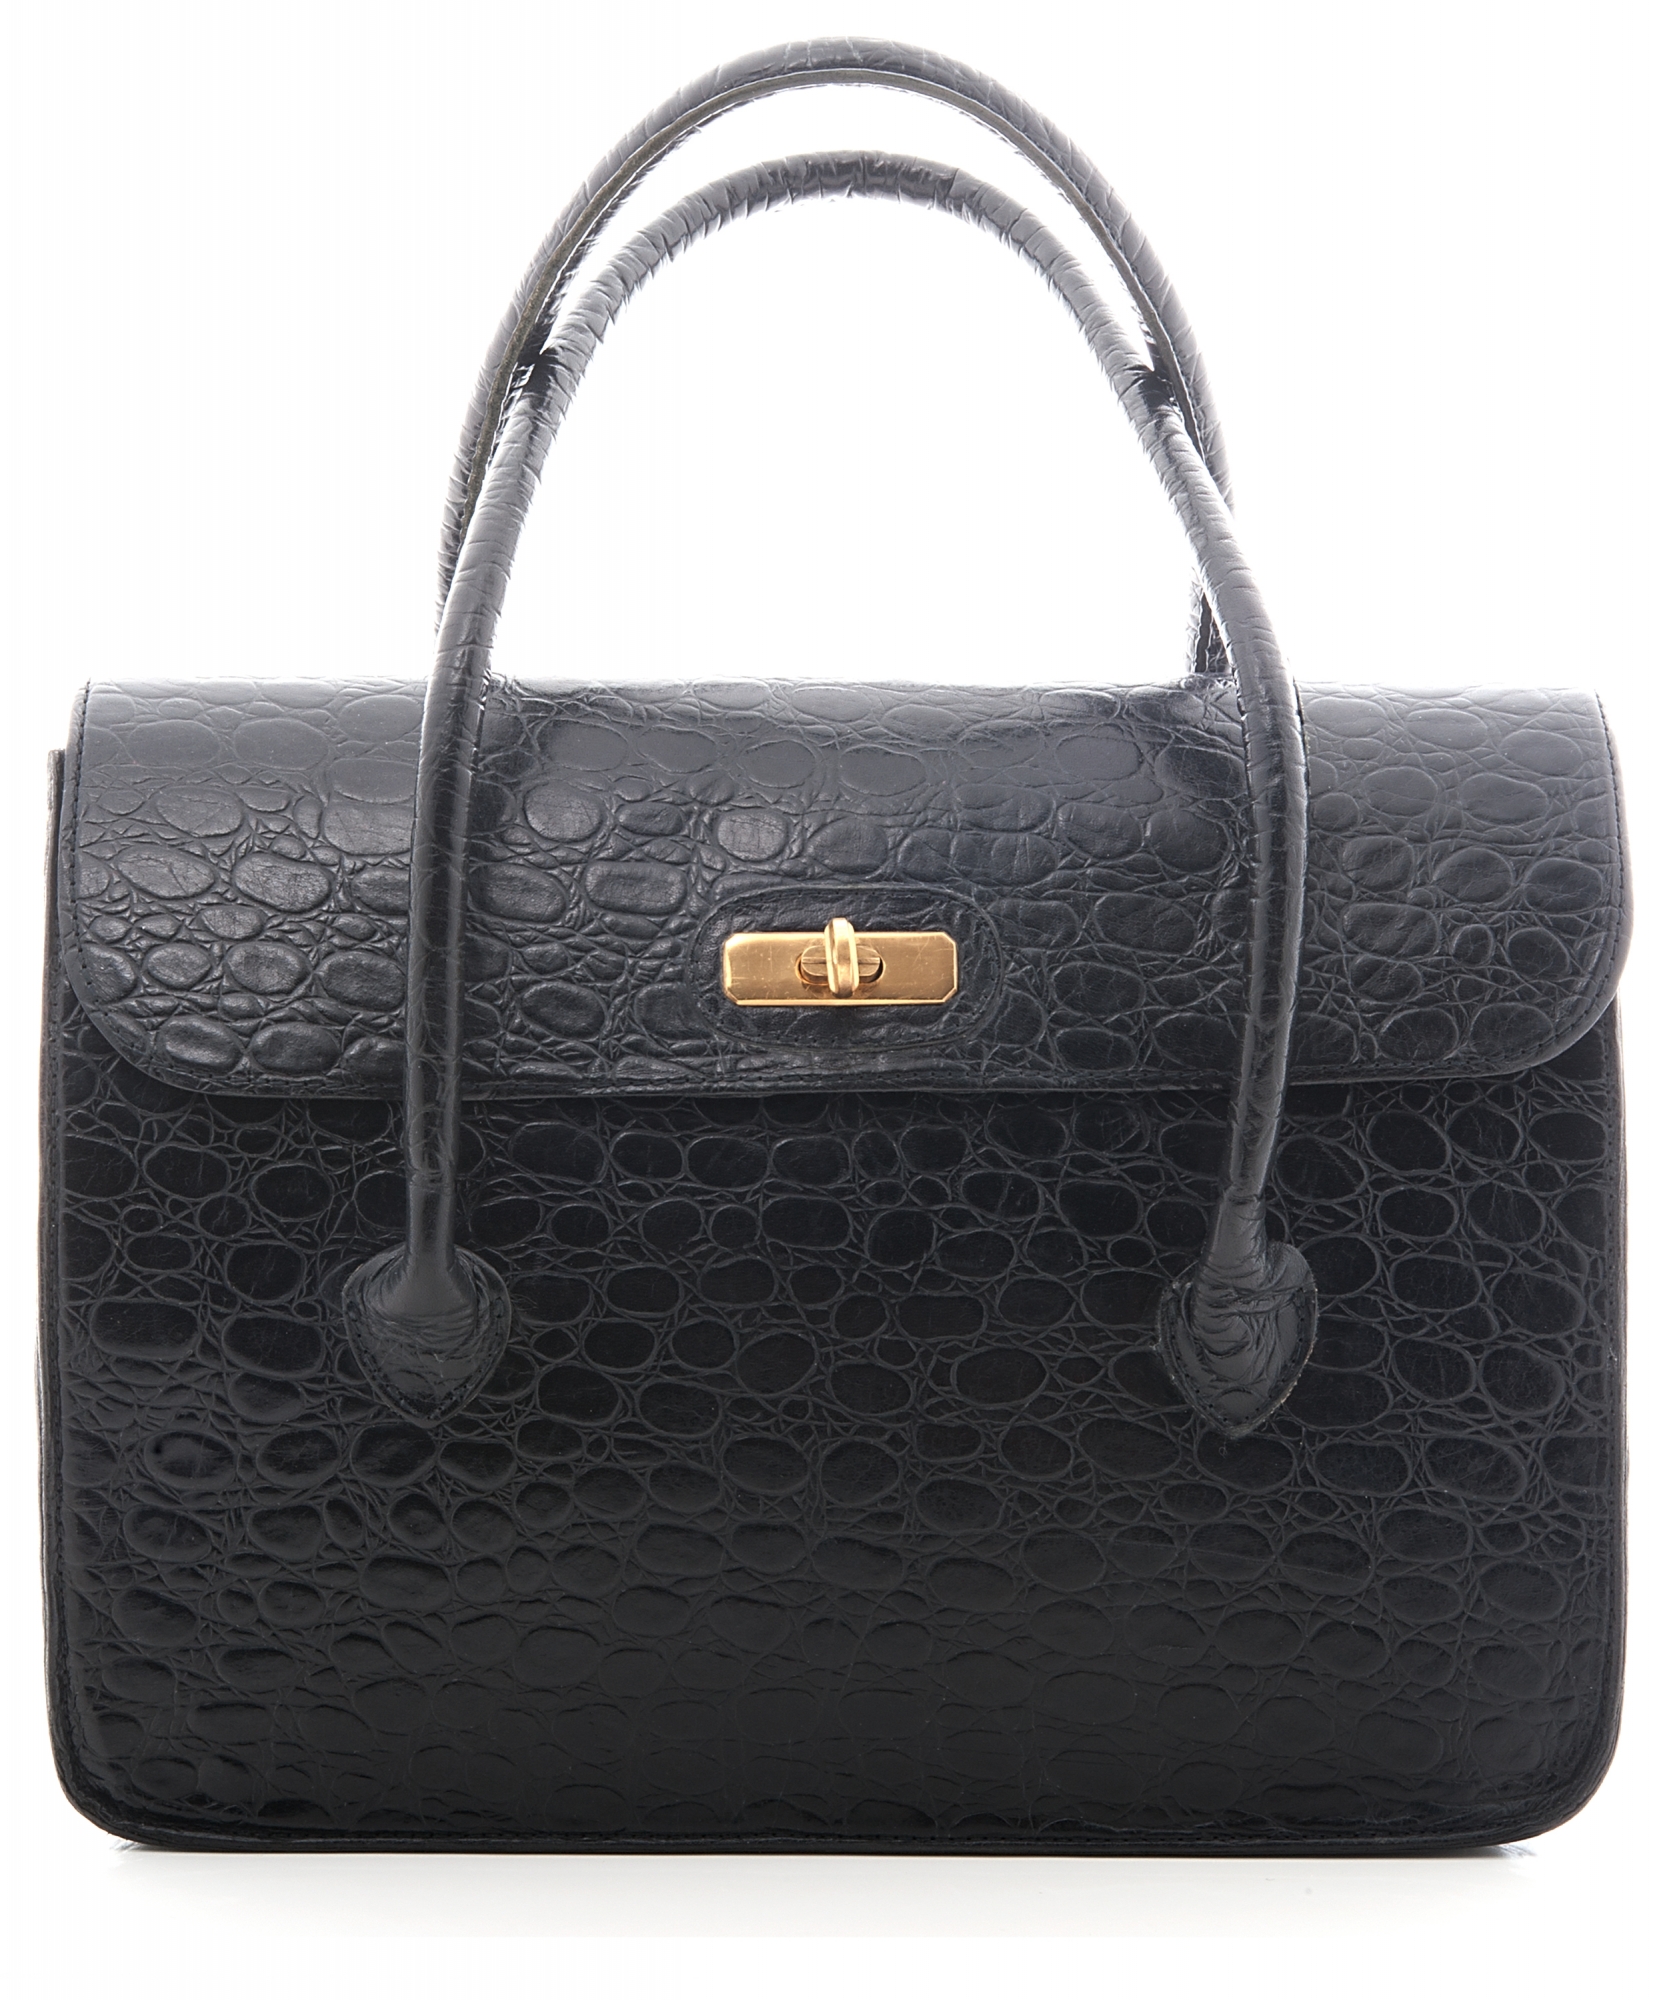 Mulberry Vintage Handbag in Black Croc Embossed Leather | La Doyenne